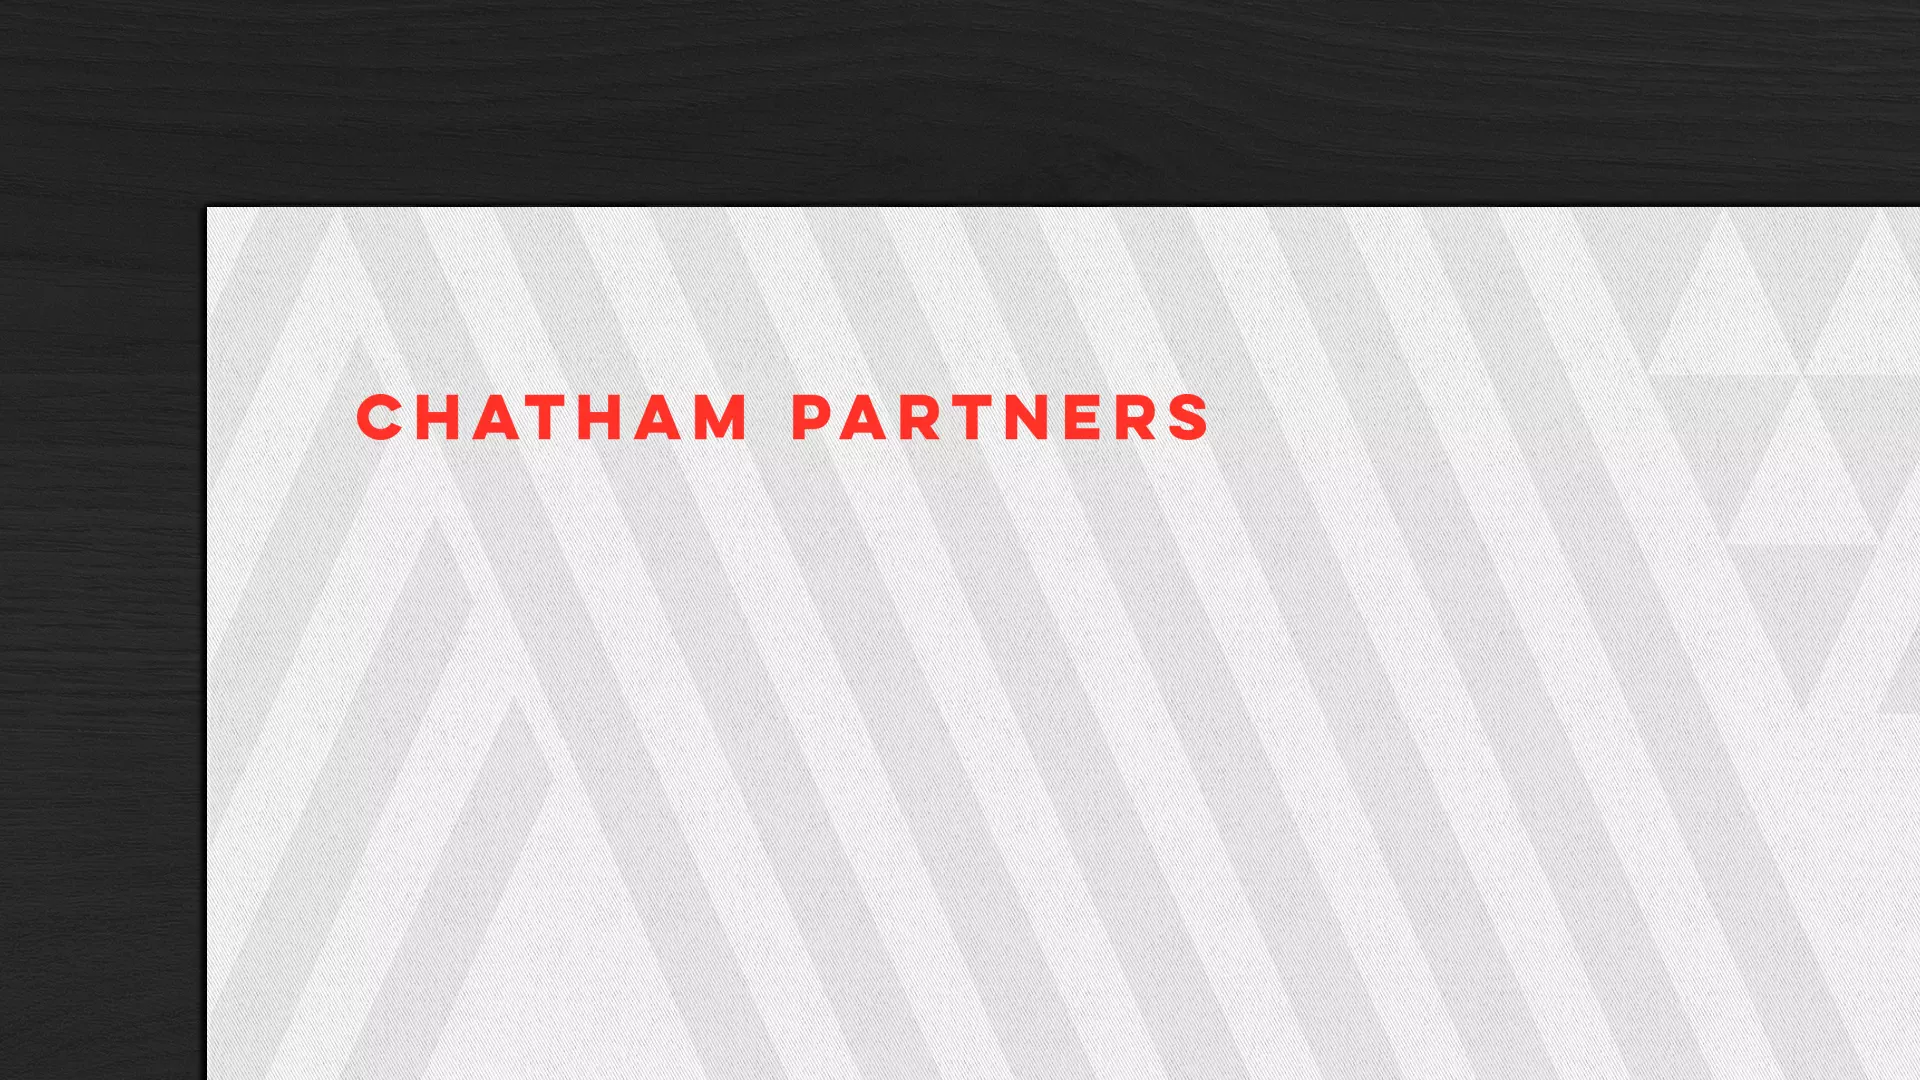 Chatham Partners